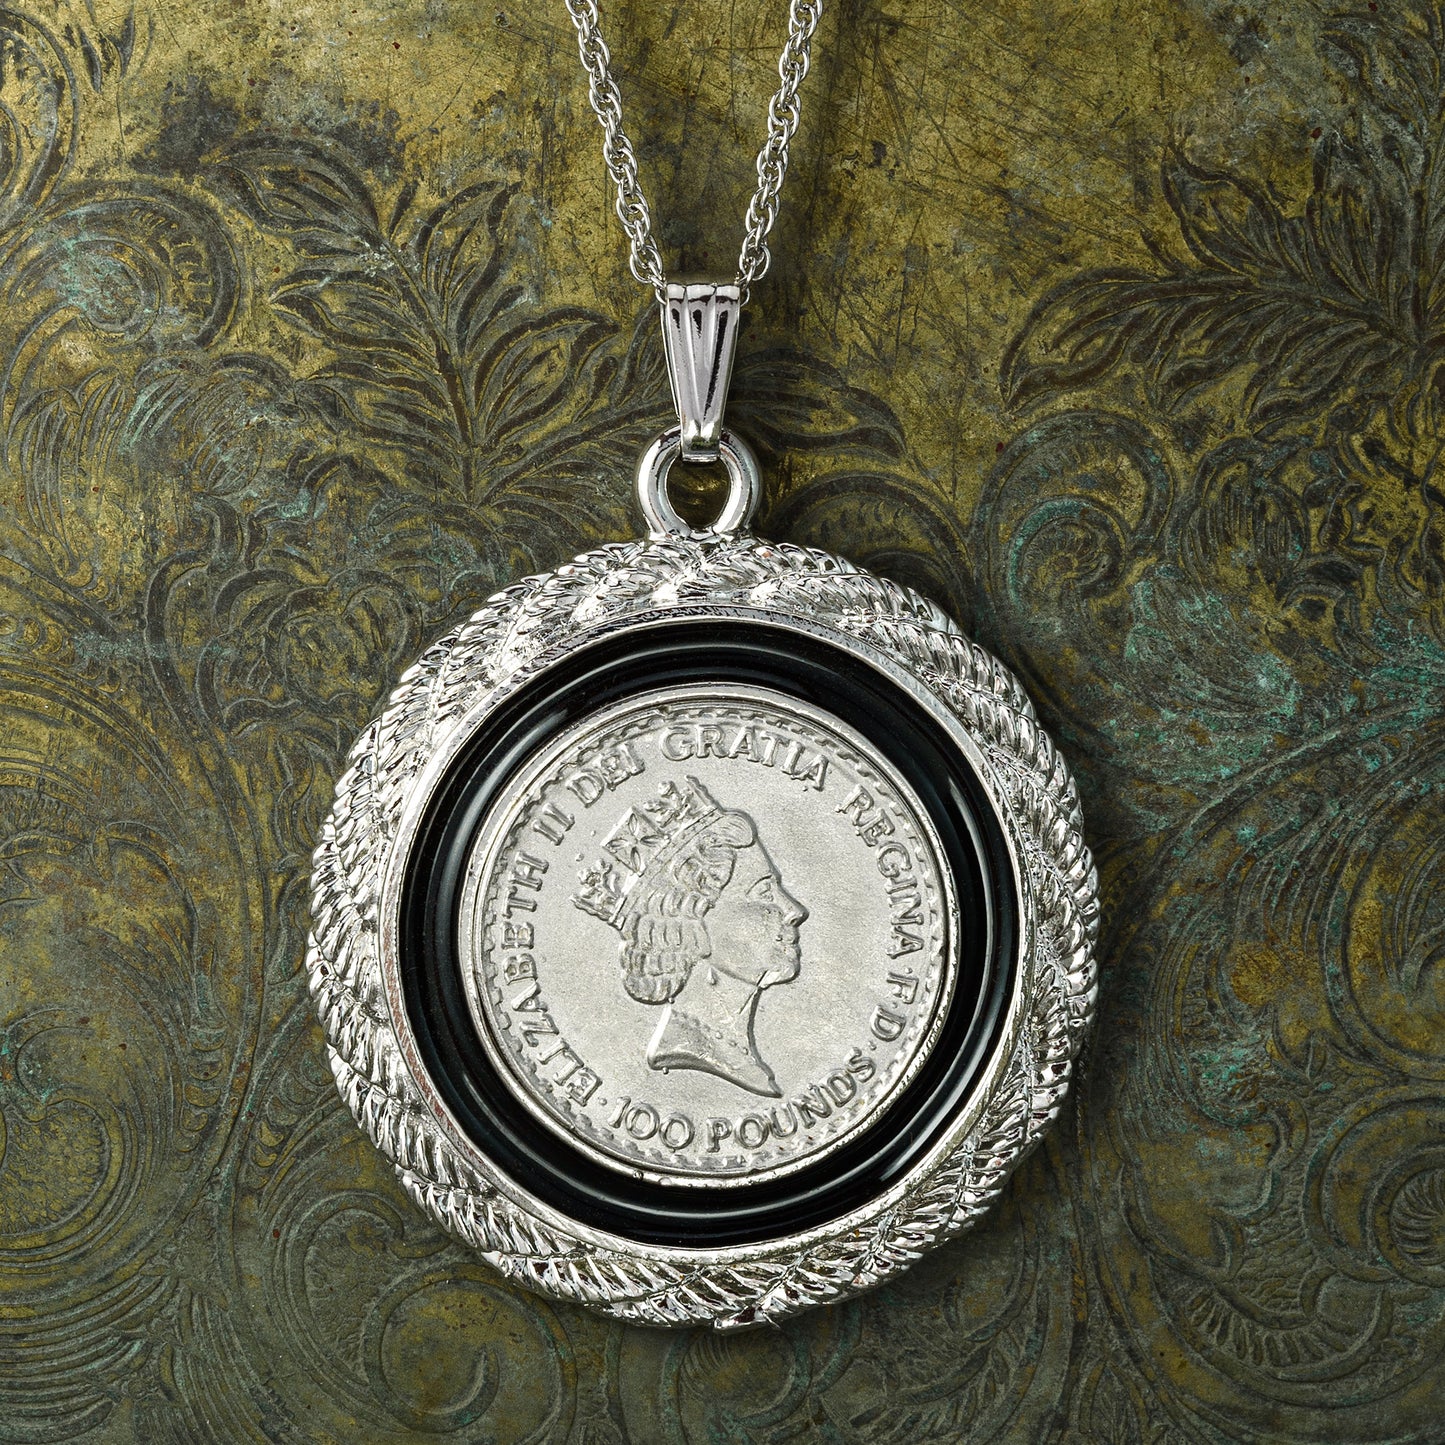 Vintage Queen Elizabeth II 100 Pound Coin Money Pendant Necklace Antique 18k White Gold Silver N785-W